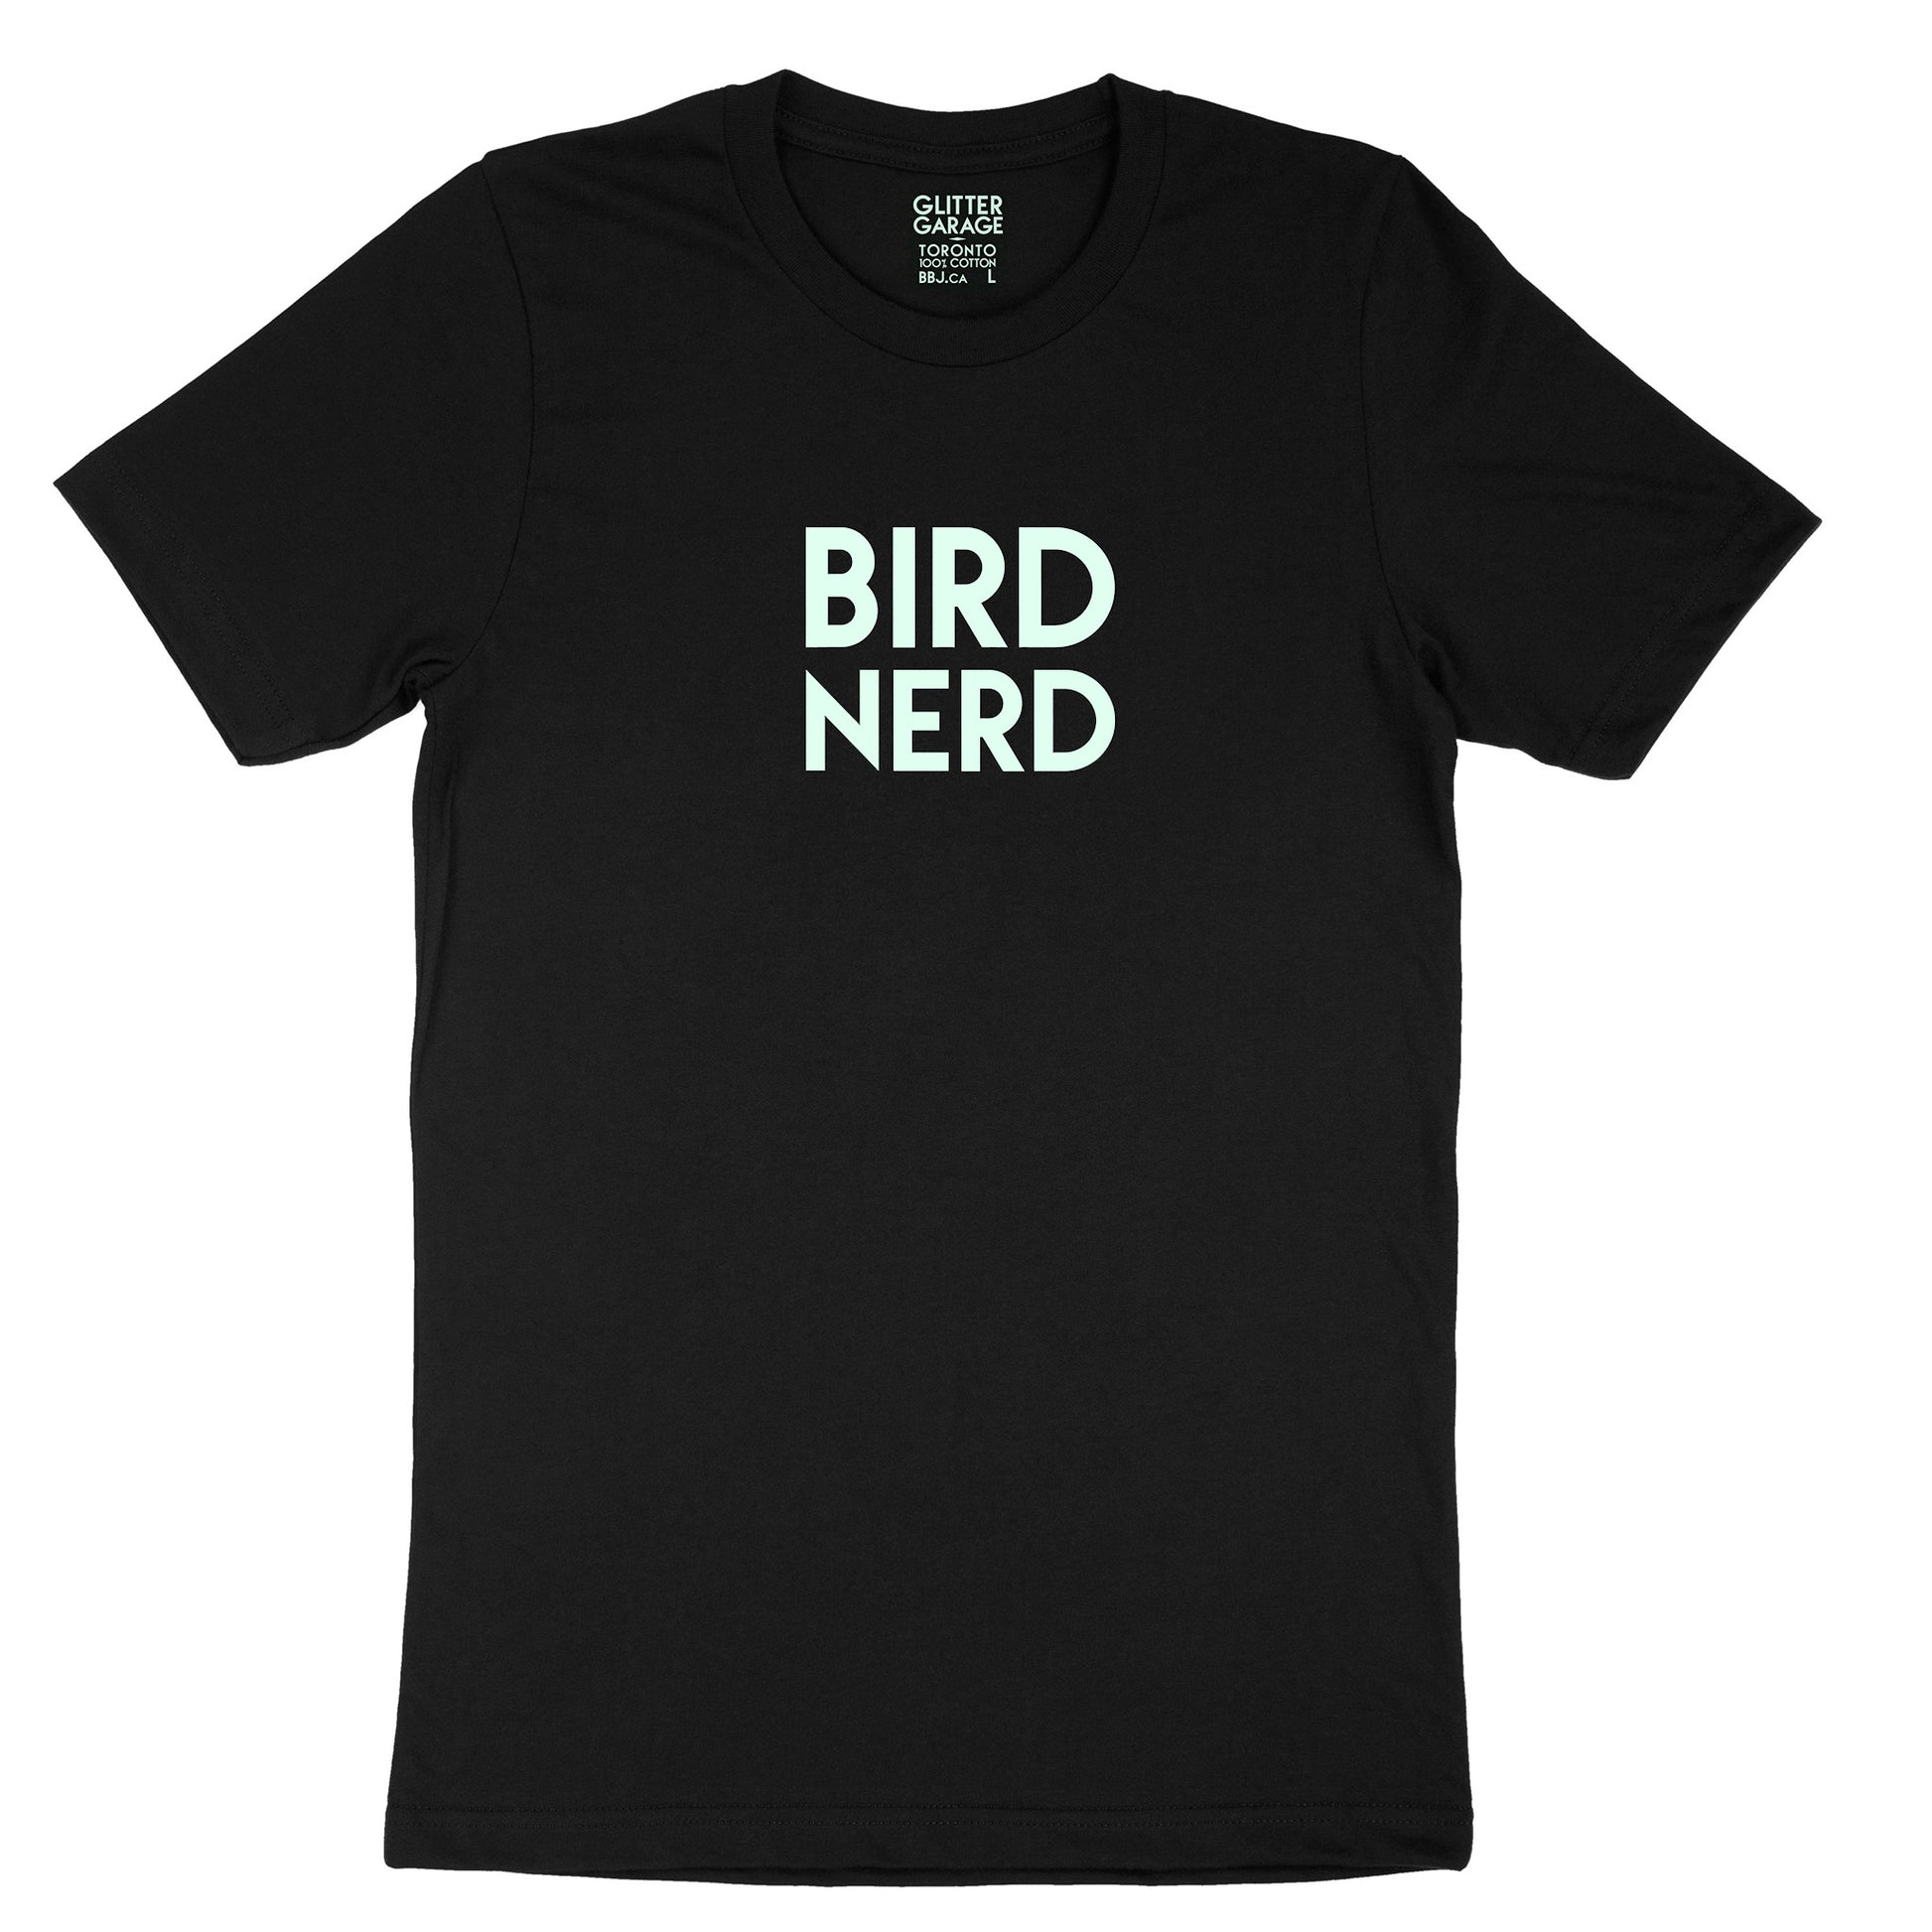 Custom text tee - Bird Nerd - glow in the dark - USE YOUR WORDS black unisex t-shirt by BBJ / Glitter Garage